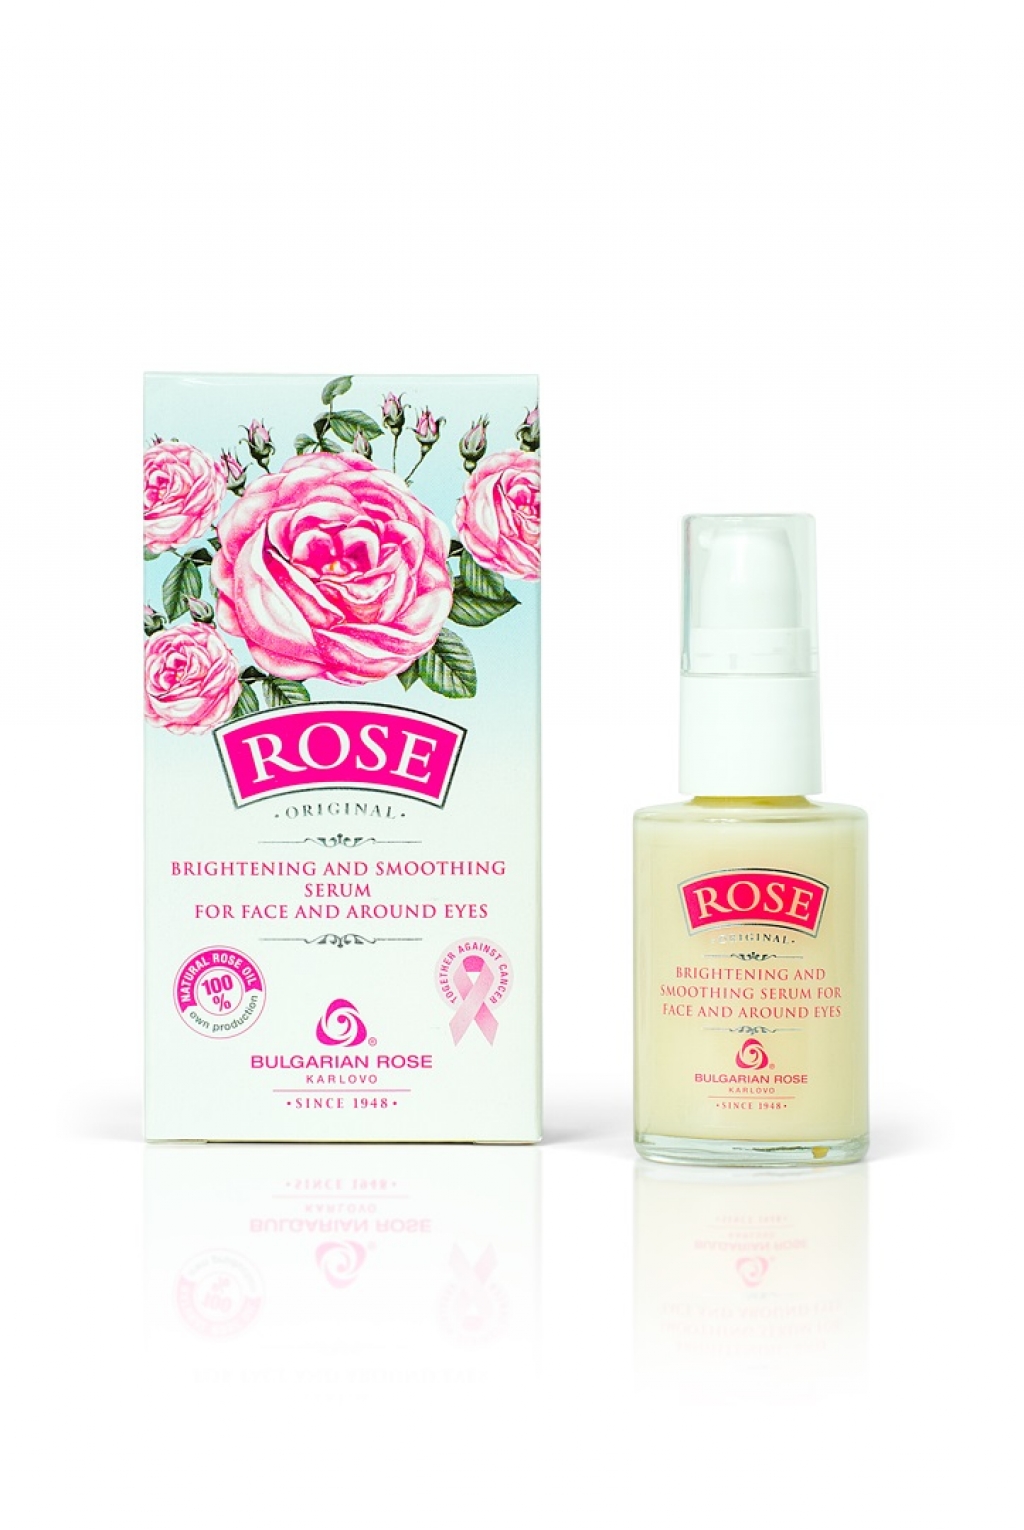 Rose Original brightening and smoothing serum for face and around eyes 30  ml - Face - Bulgarian Rose